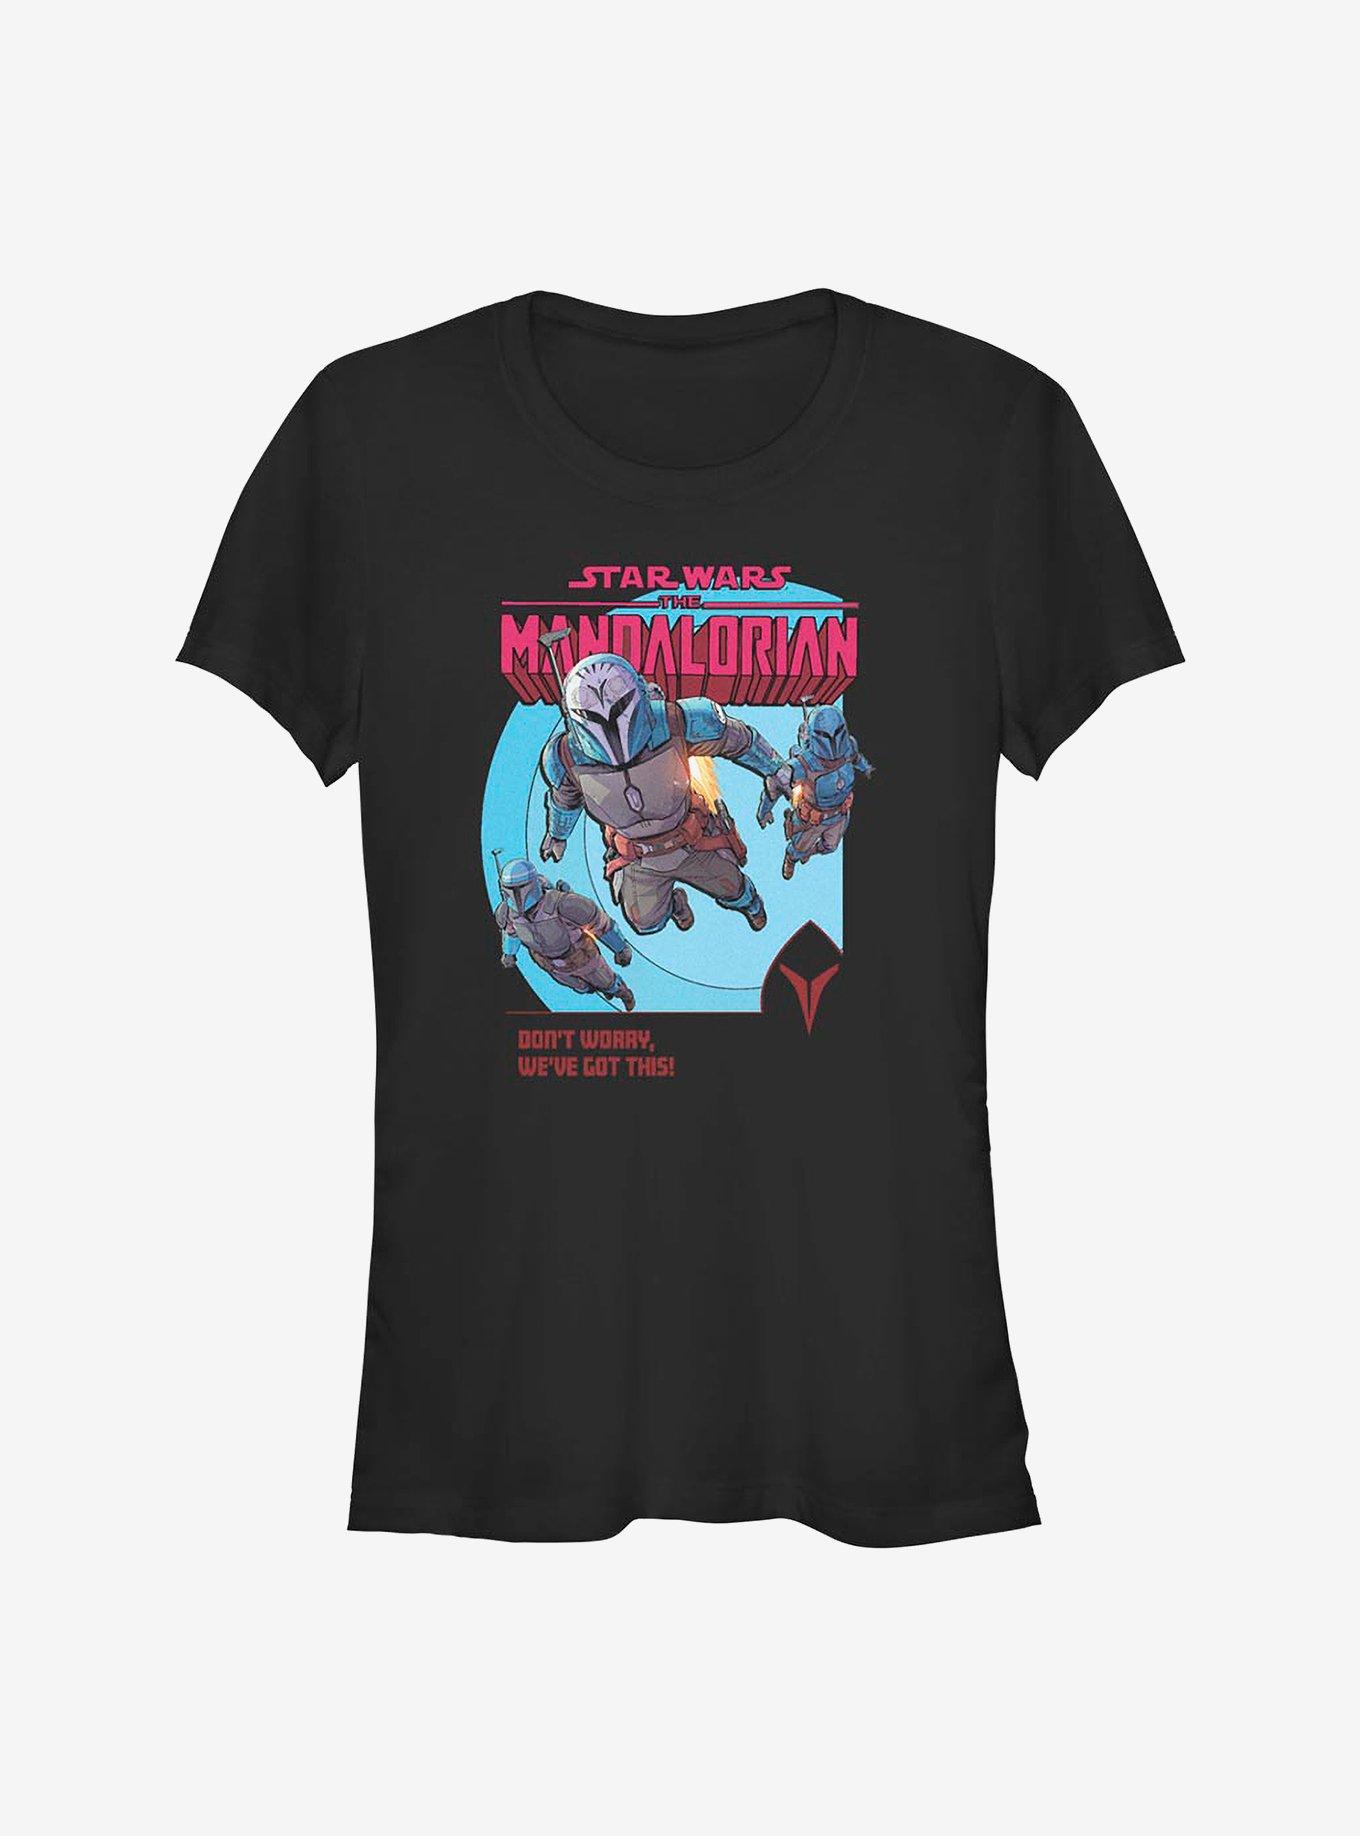 Star Wars The Mandalorian We've Got This Girls T-Shirt